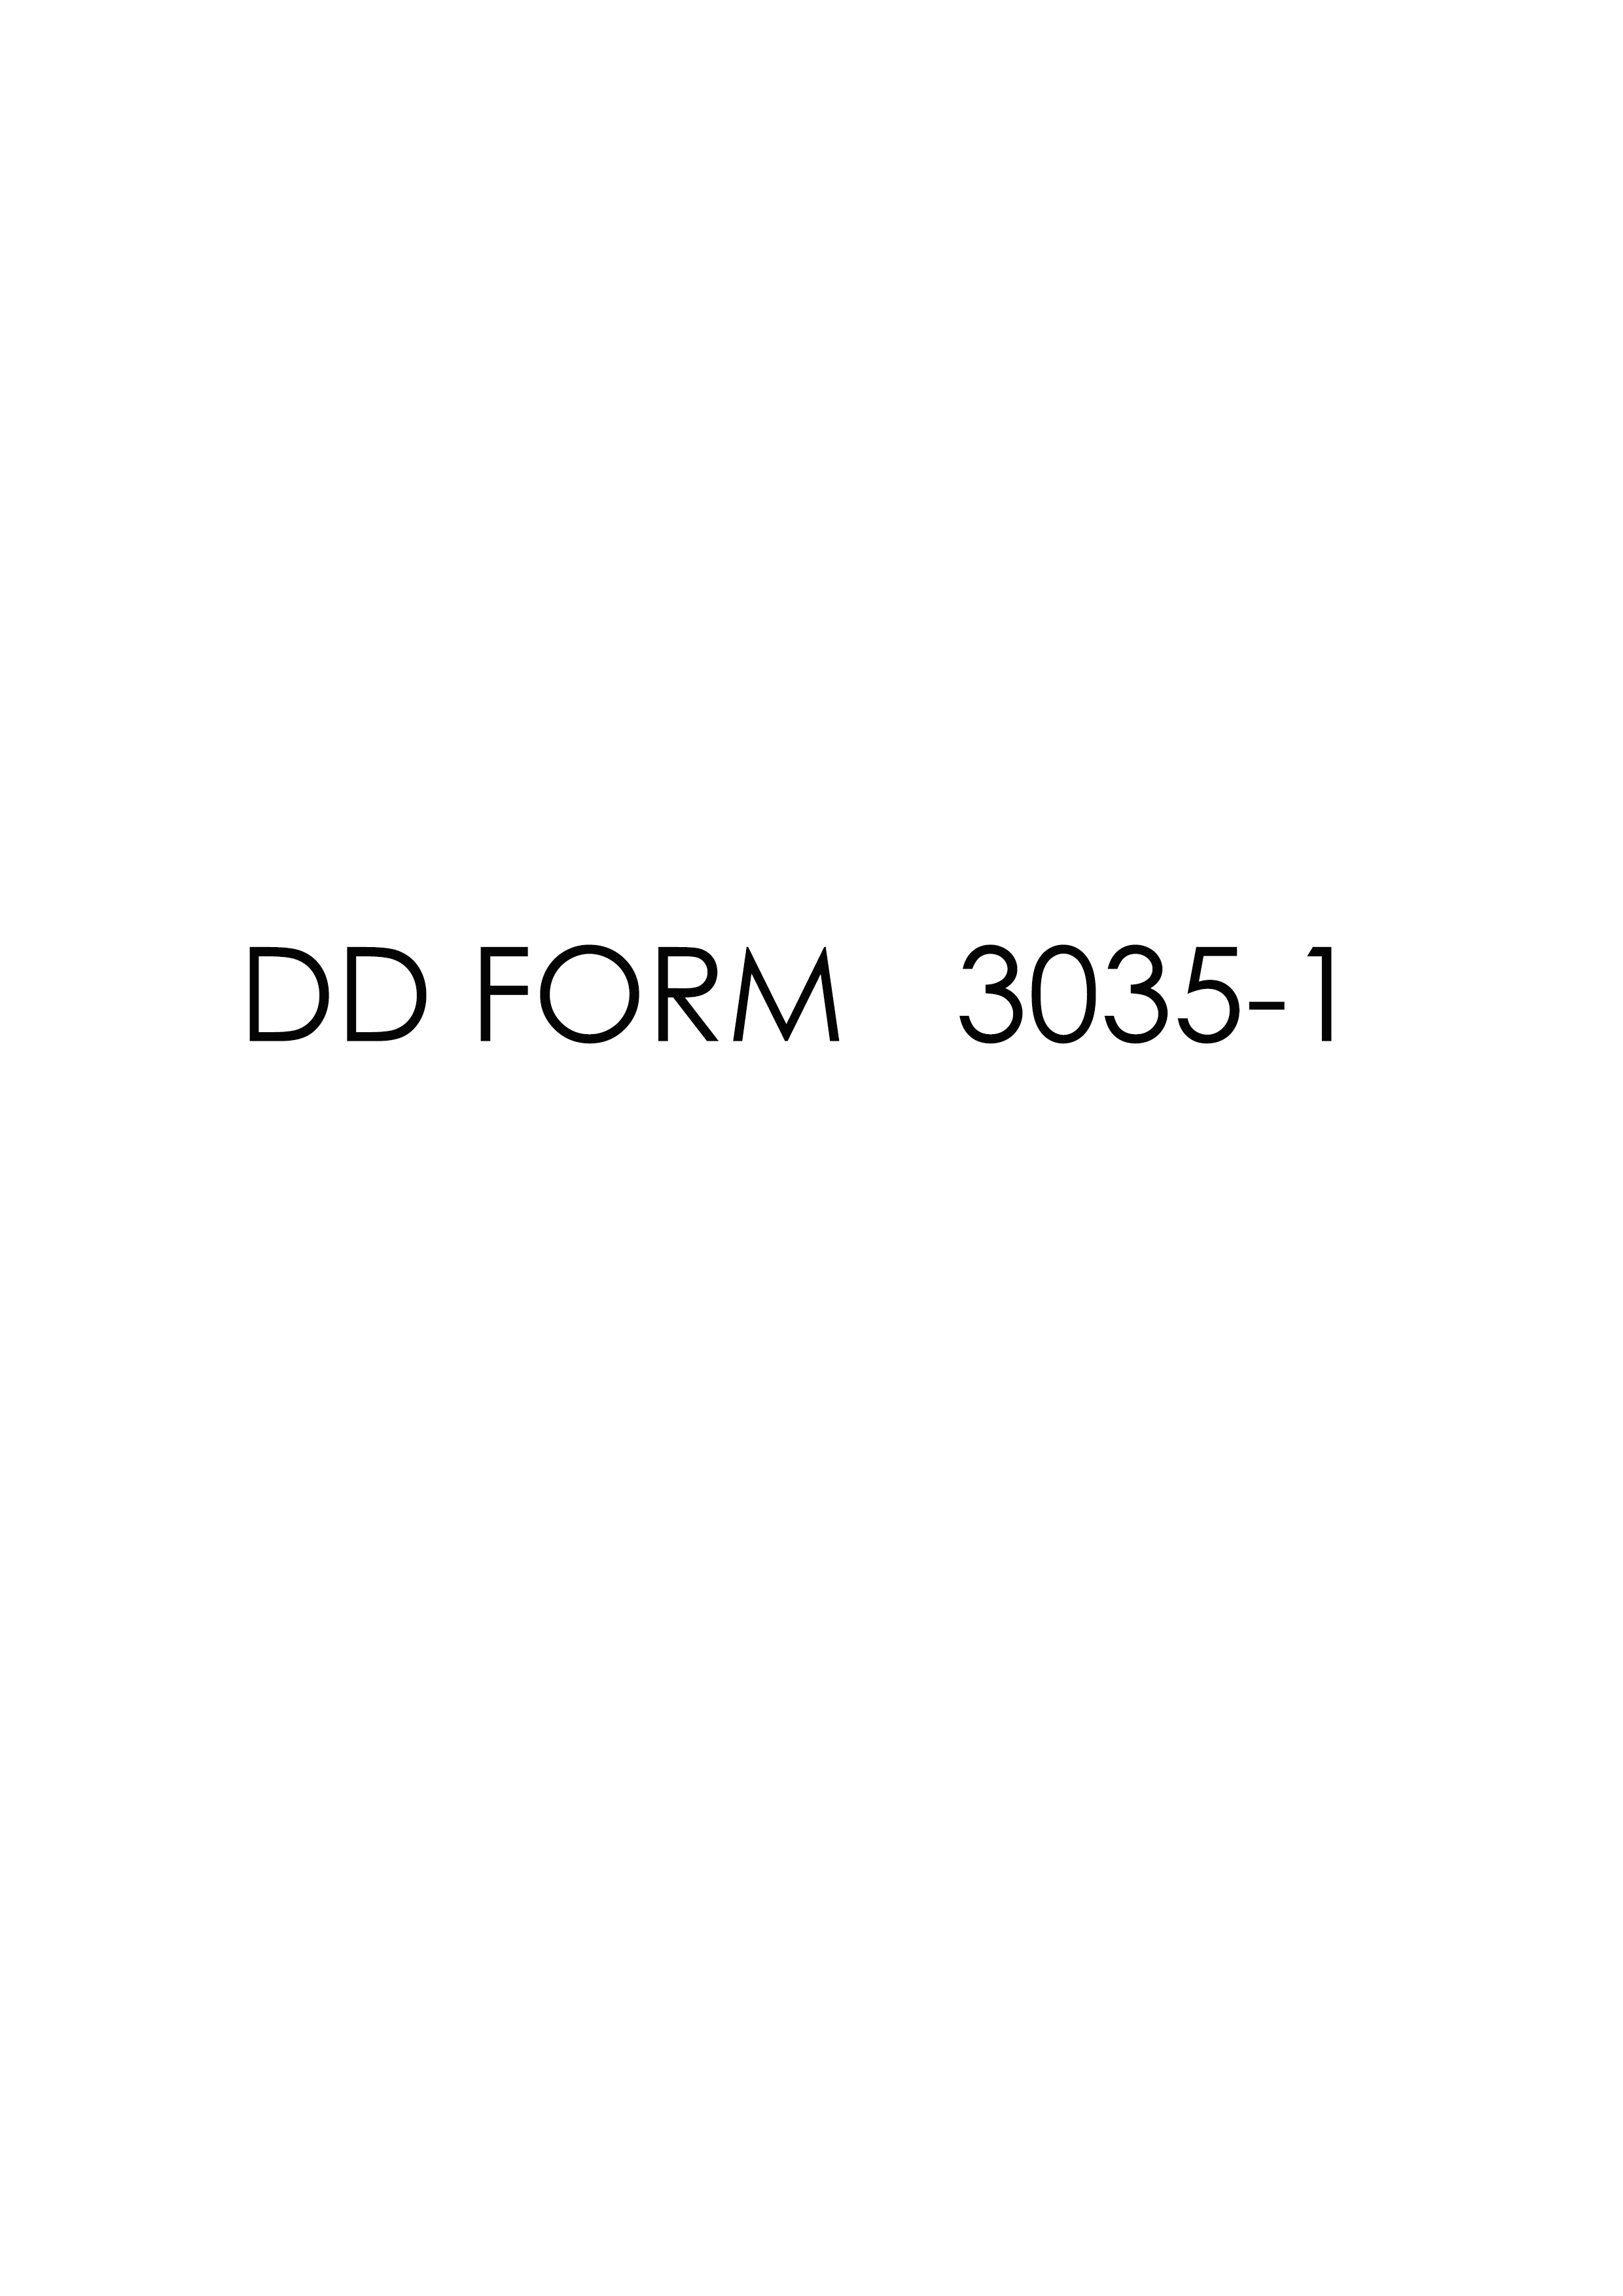 Download dd 3035-1 Form